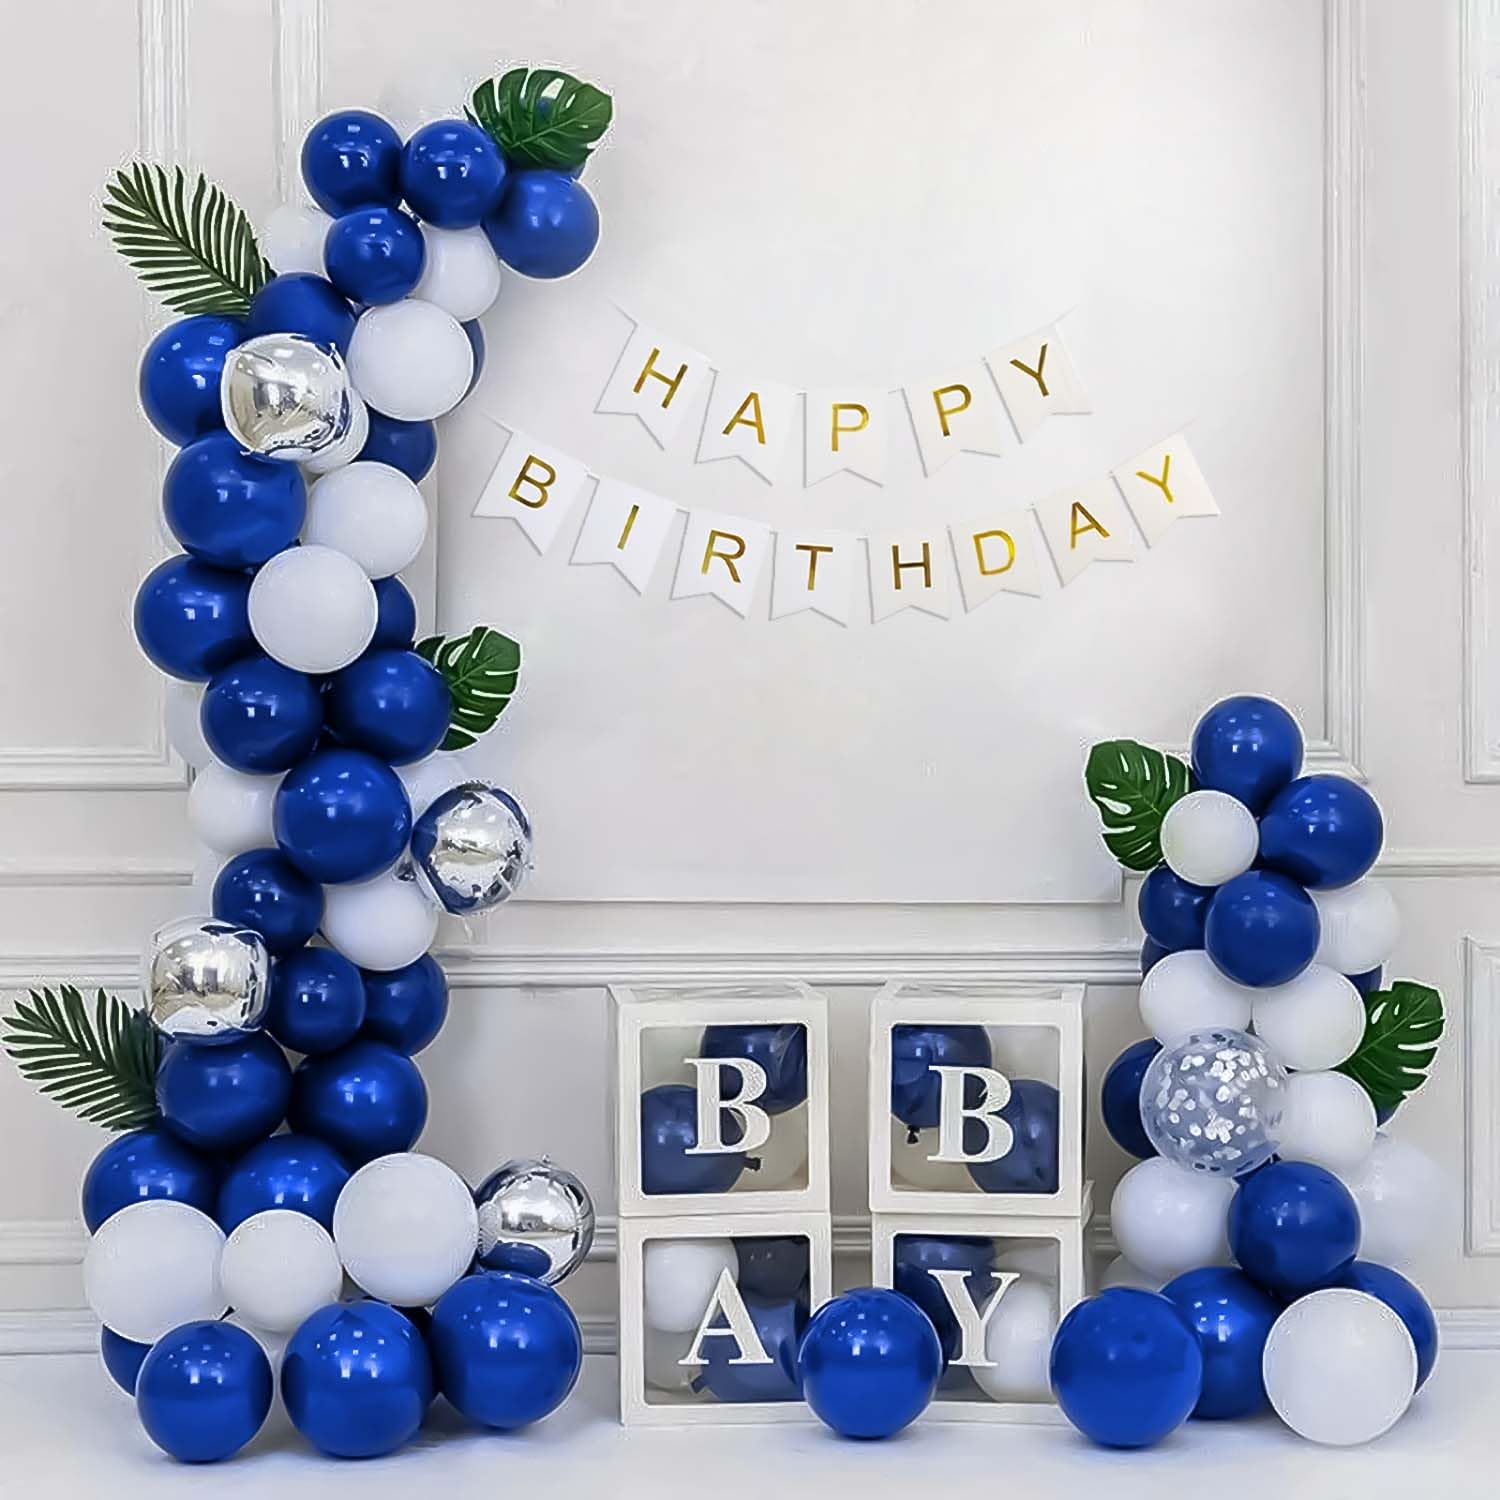 Dark Blue birthday balloons for Decor